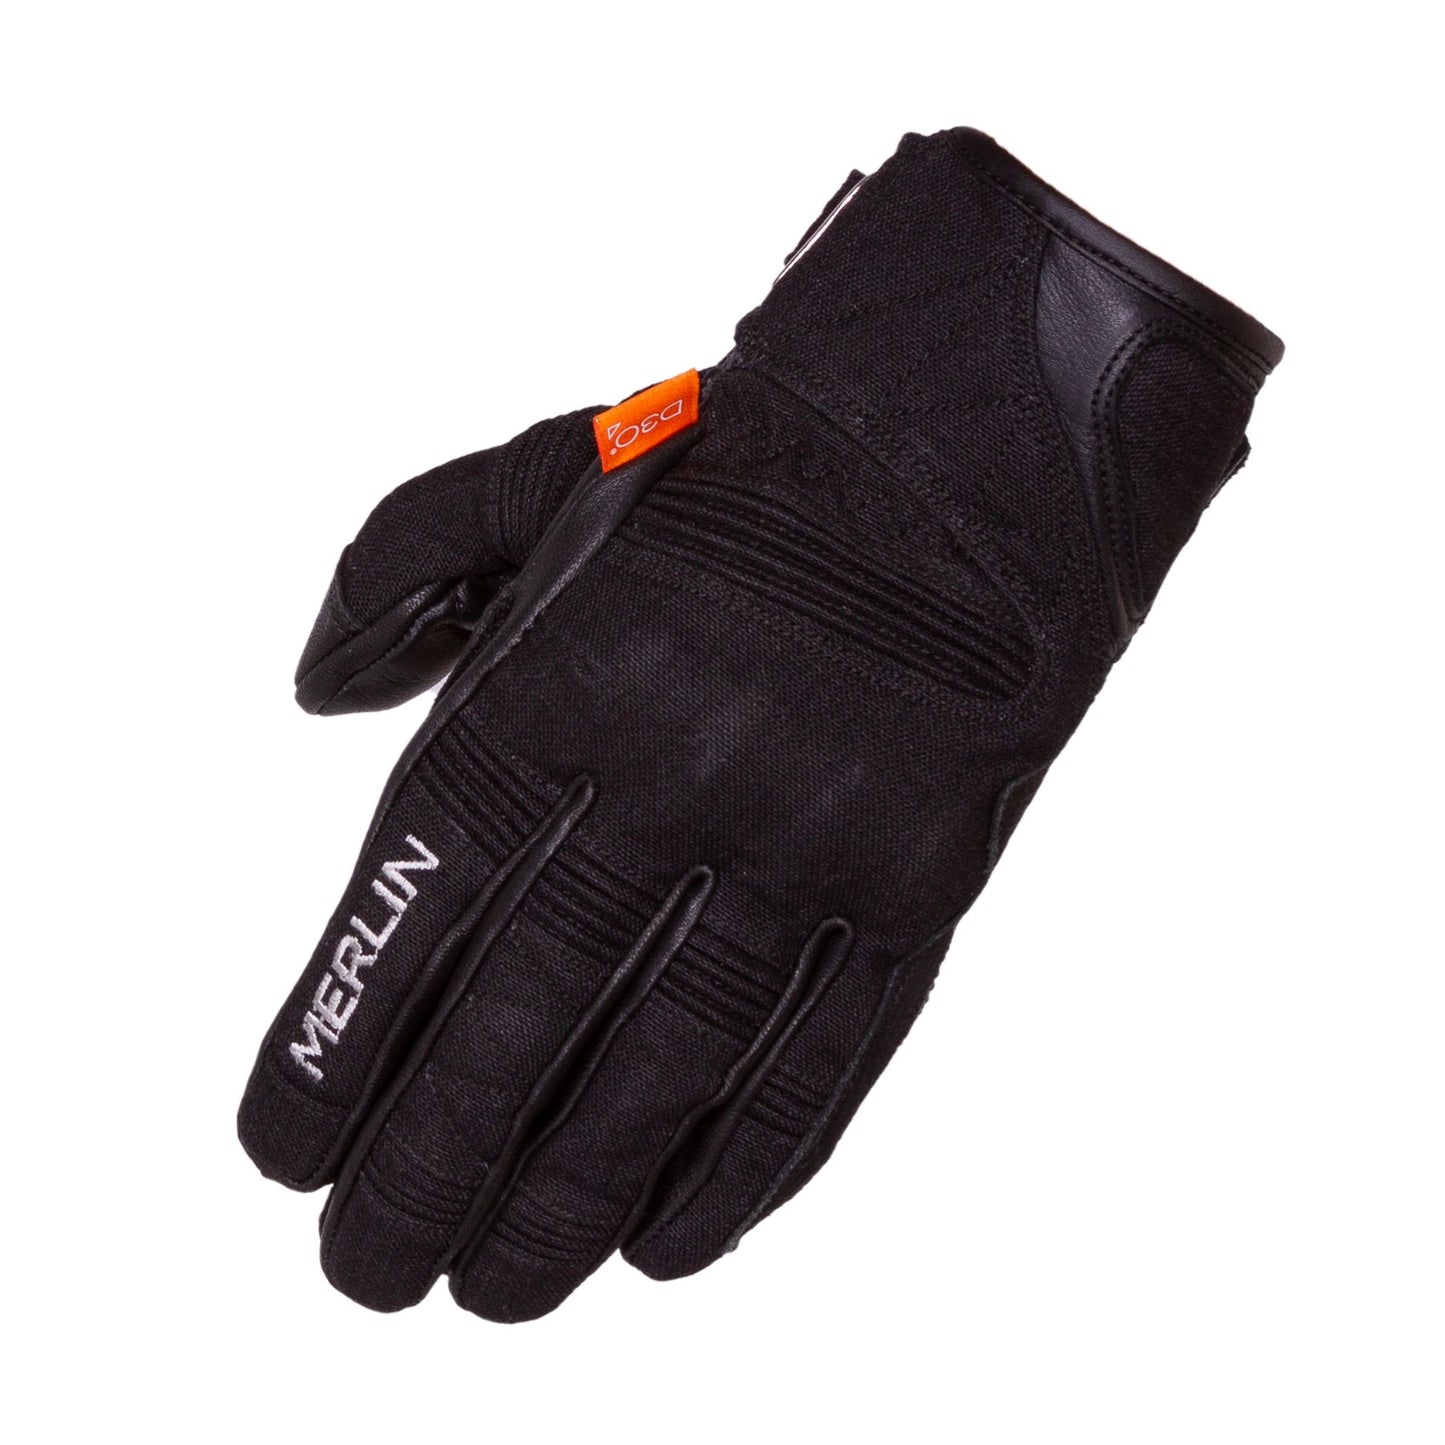 MERLIN Mahala D30 Raid Glove